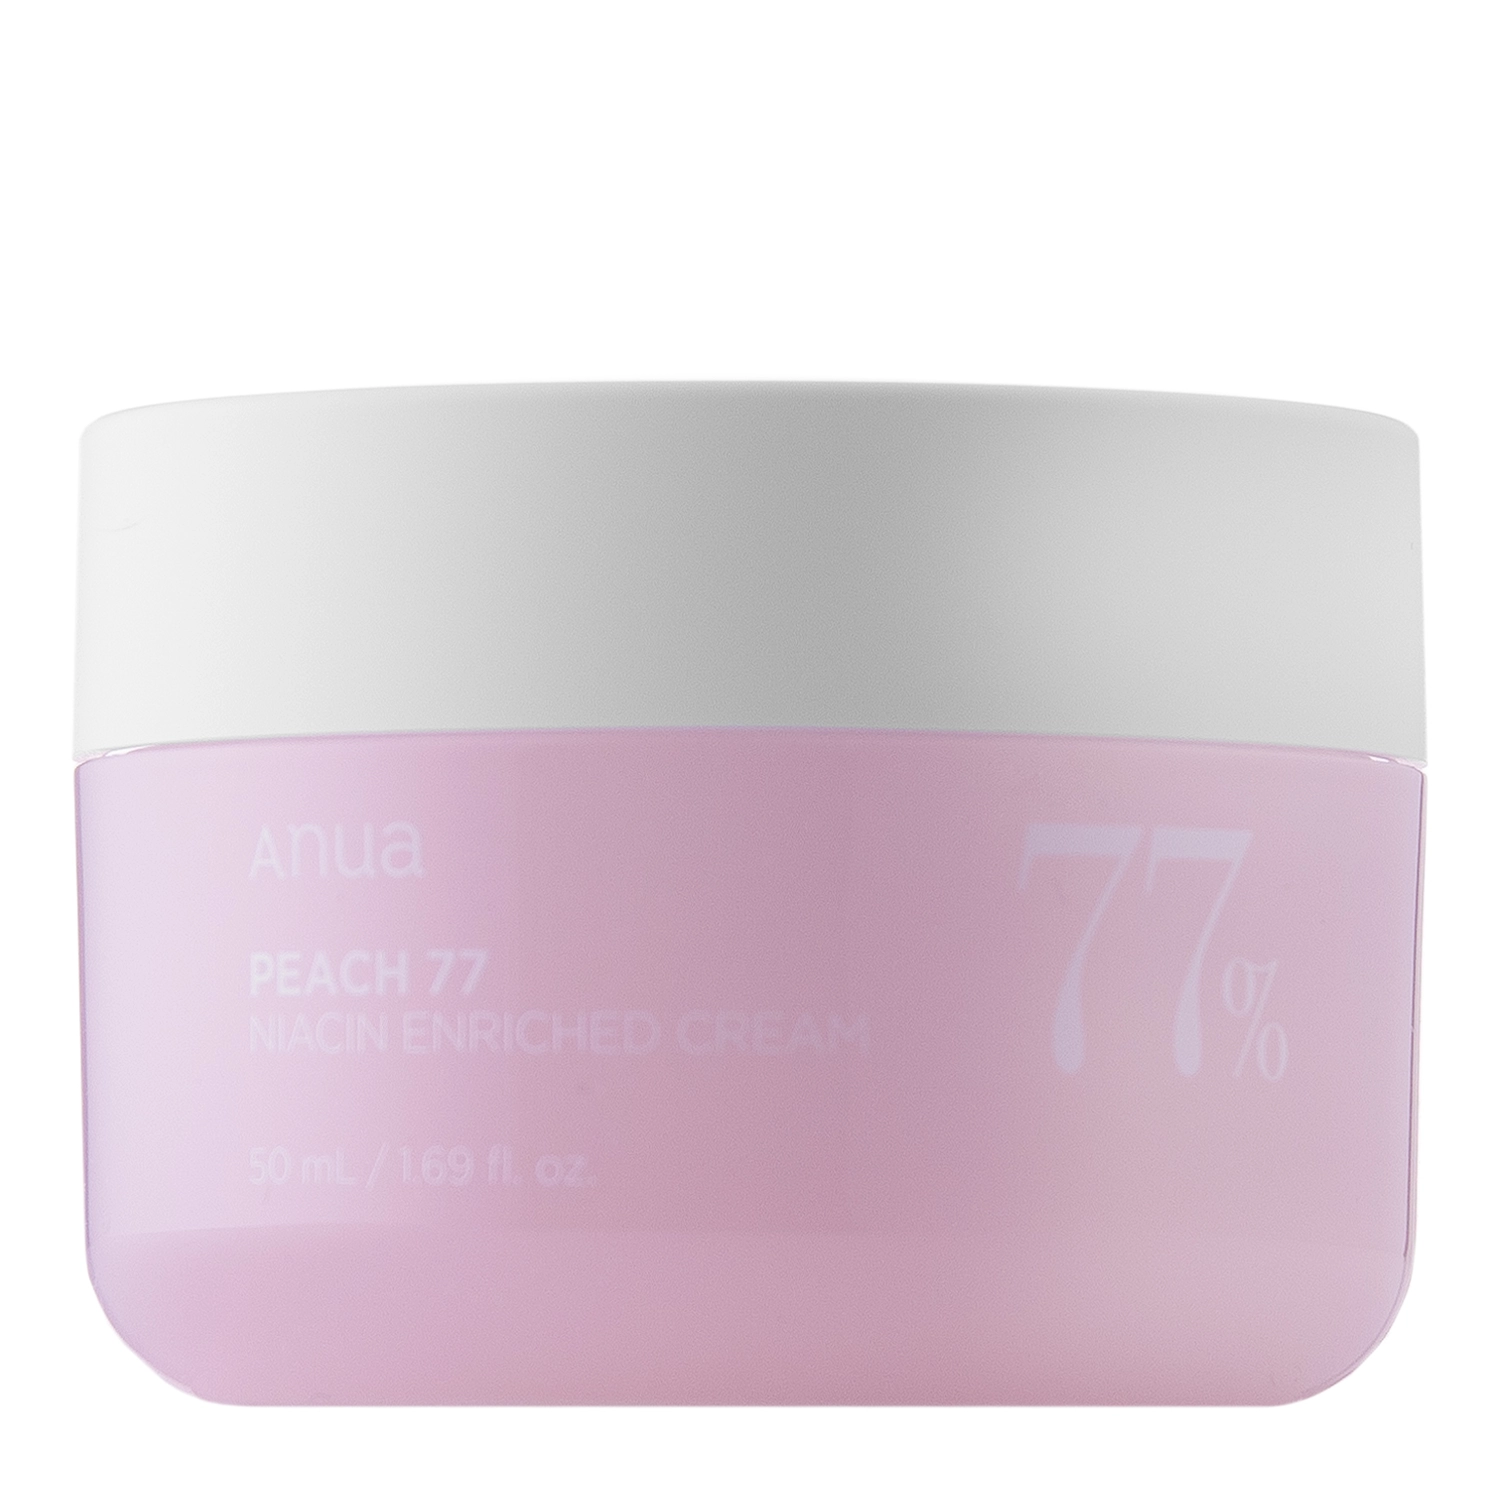 Anua - Peach 77% Niacin Enriched Cream - Зволожувальний крем для обличчя з екстрактом персика 77% - 50ml